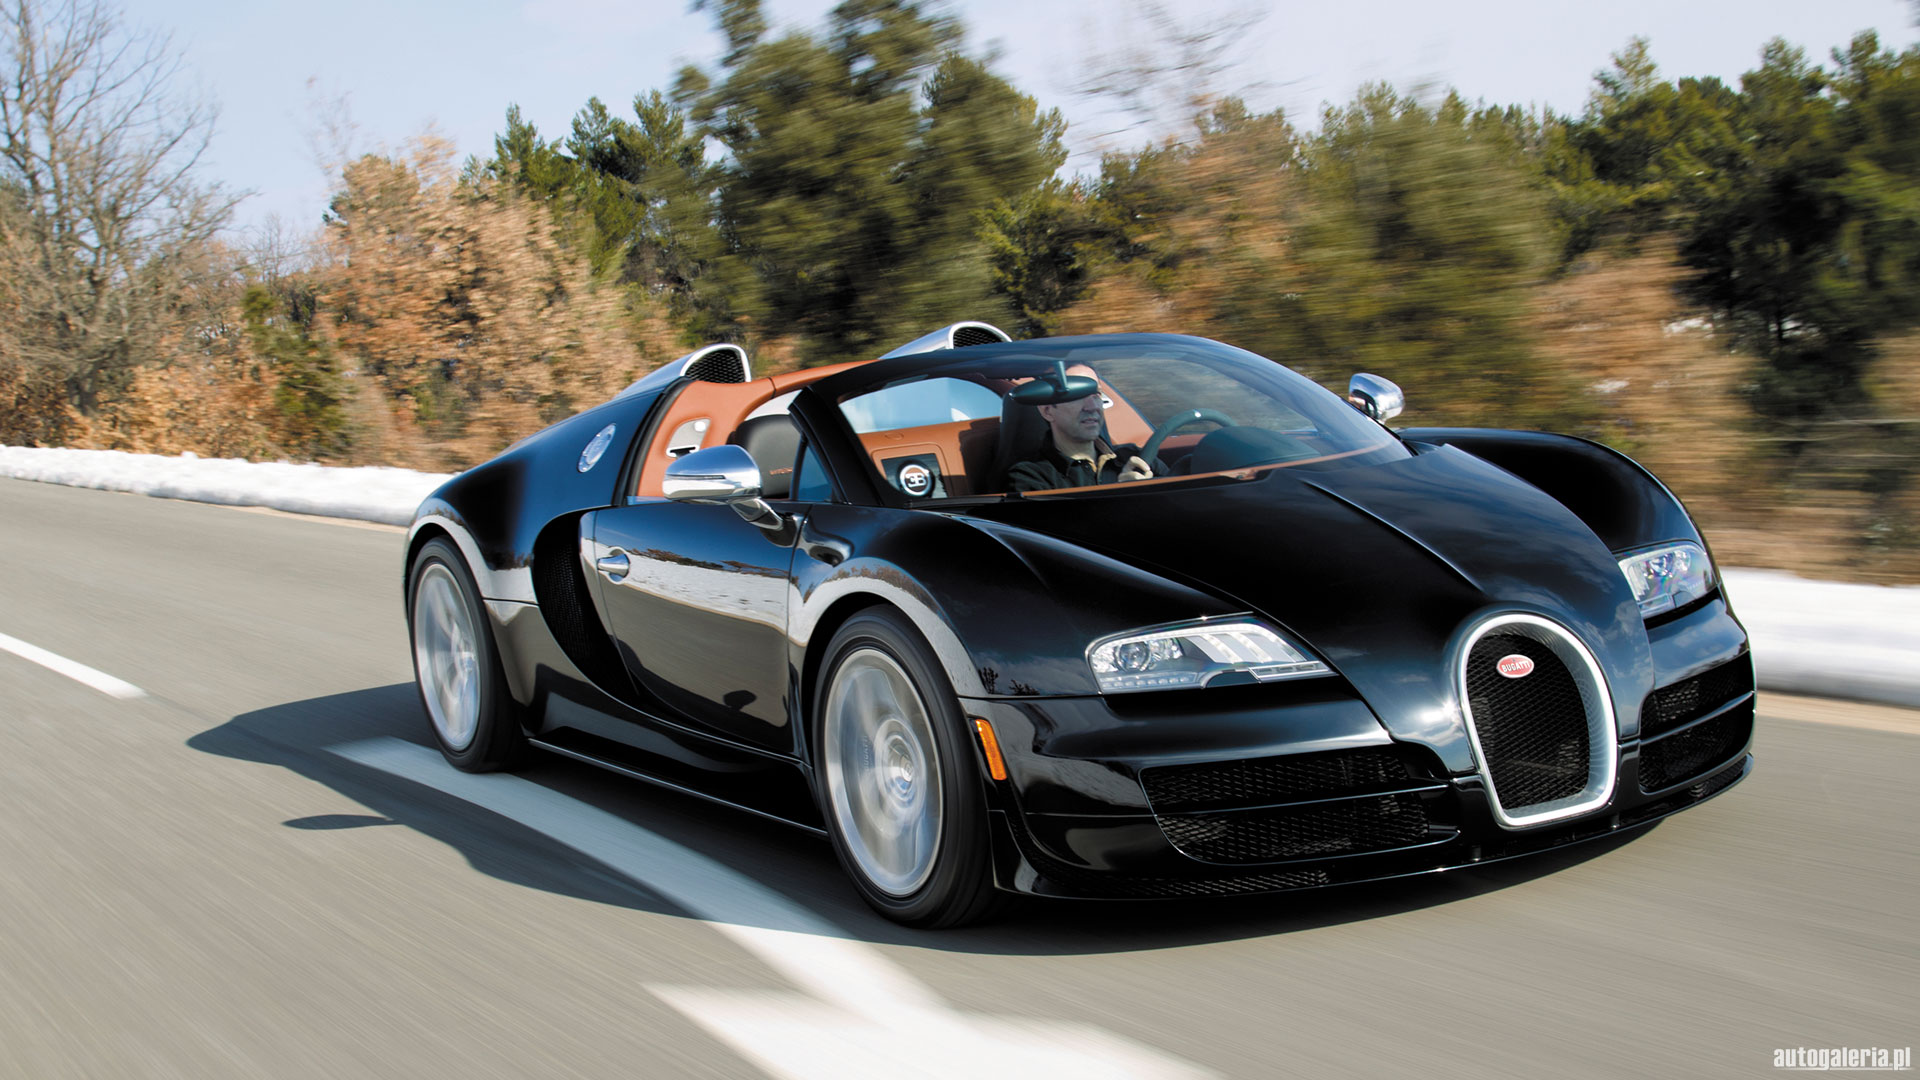 Автомобиль Bugatti Veyron Grand Sport HD фото картинки, обои рабочий стол